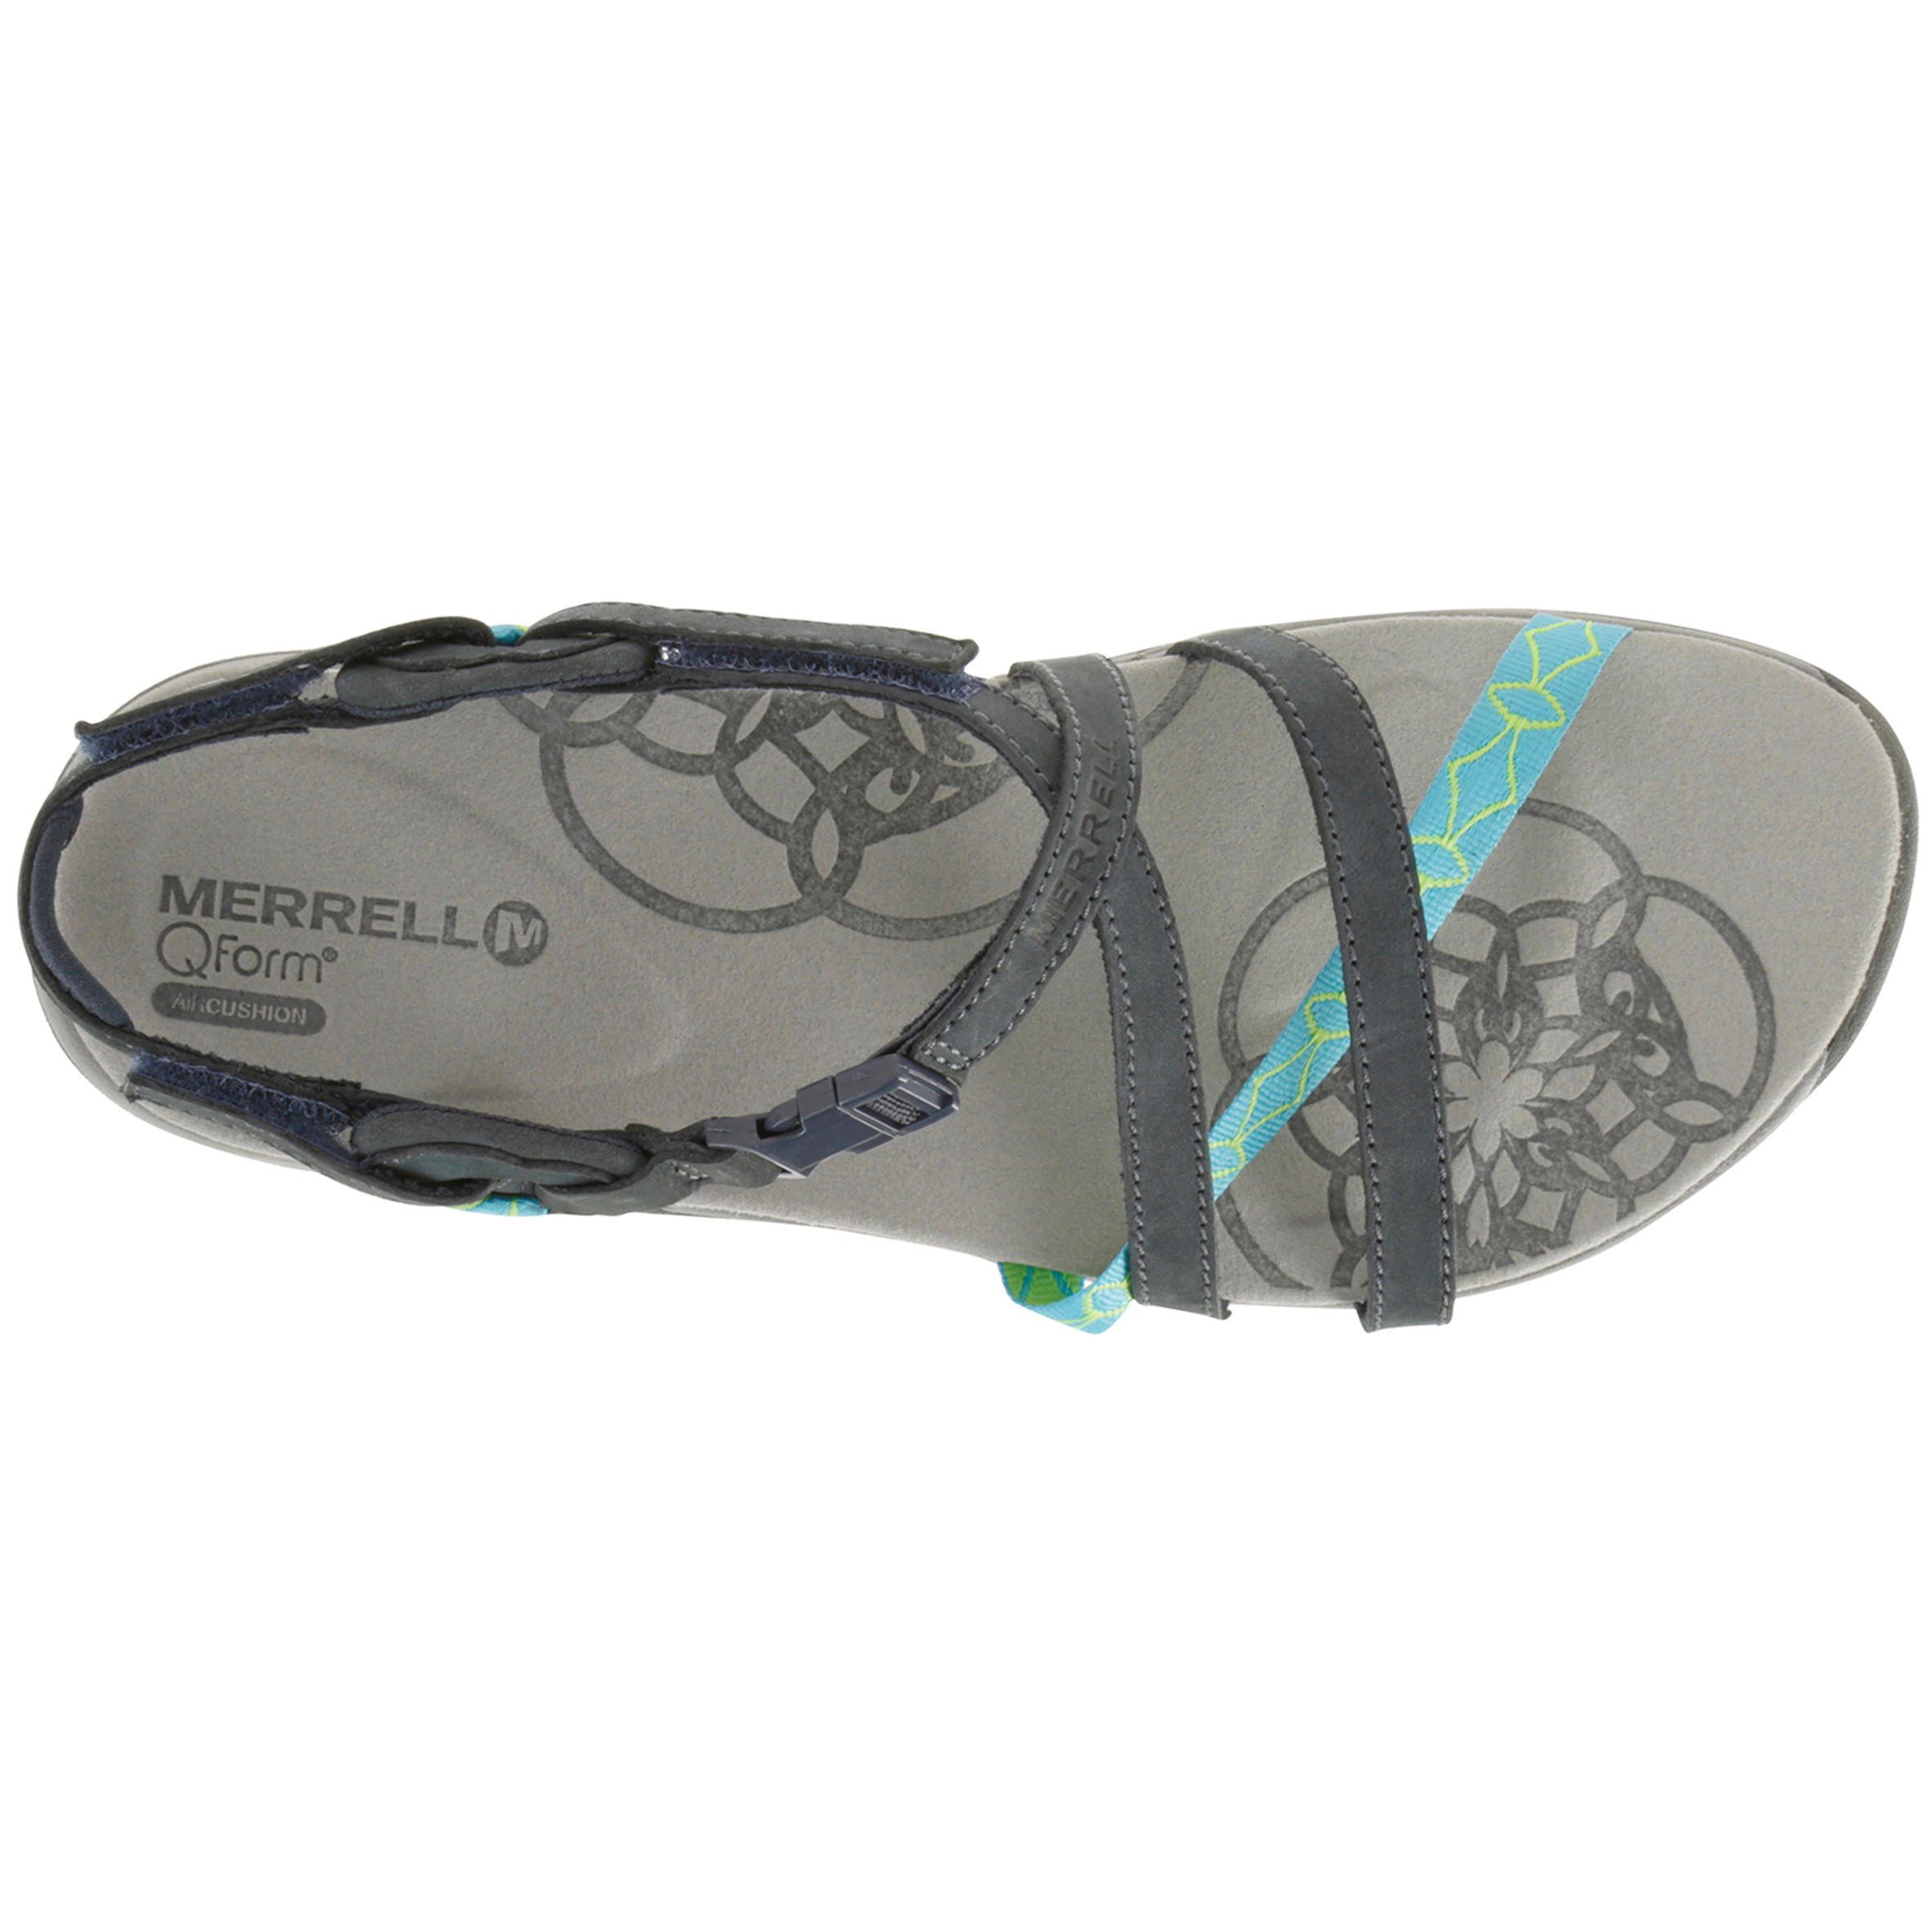 Jacardia Women's Hiking Sandals with Good Grip - Grey 3/14